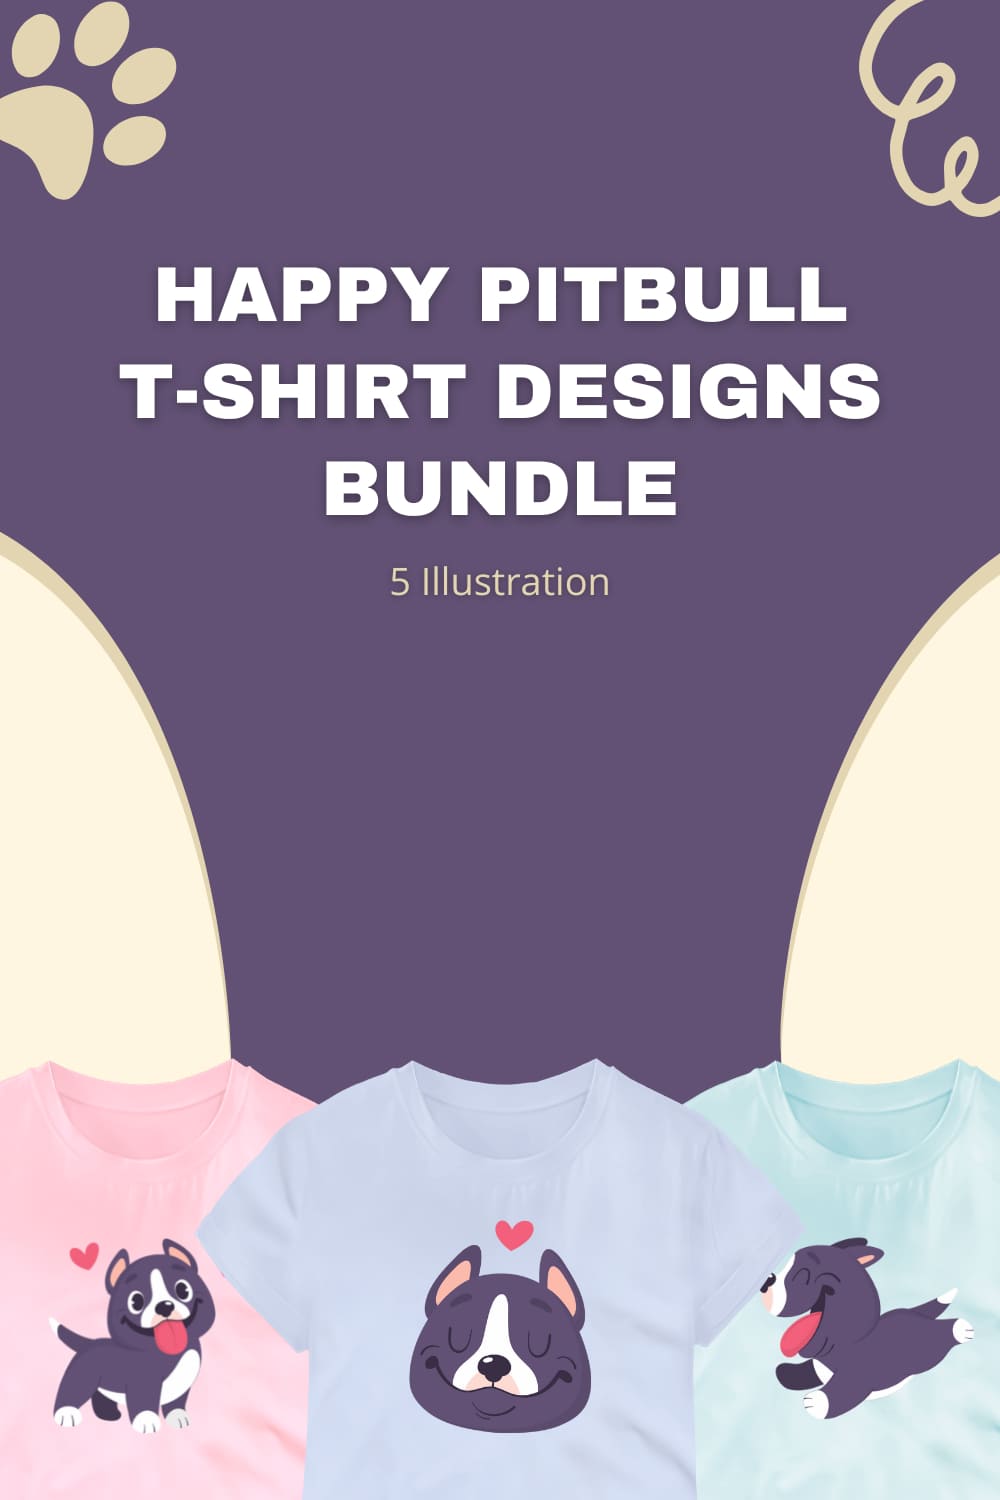 Happy Pitbull Svg T-shirt Designs Bundle - Pinterest.